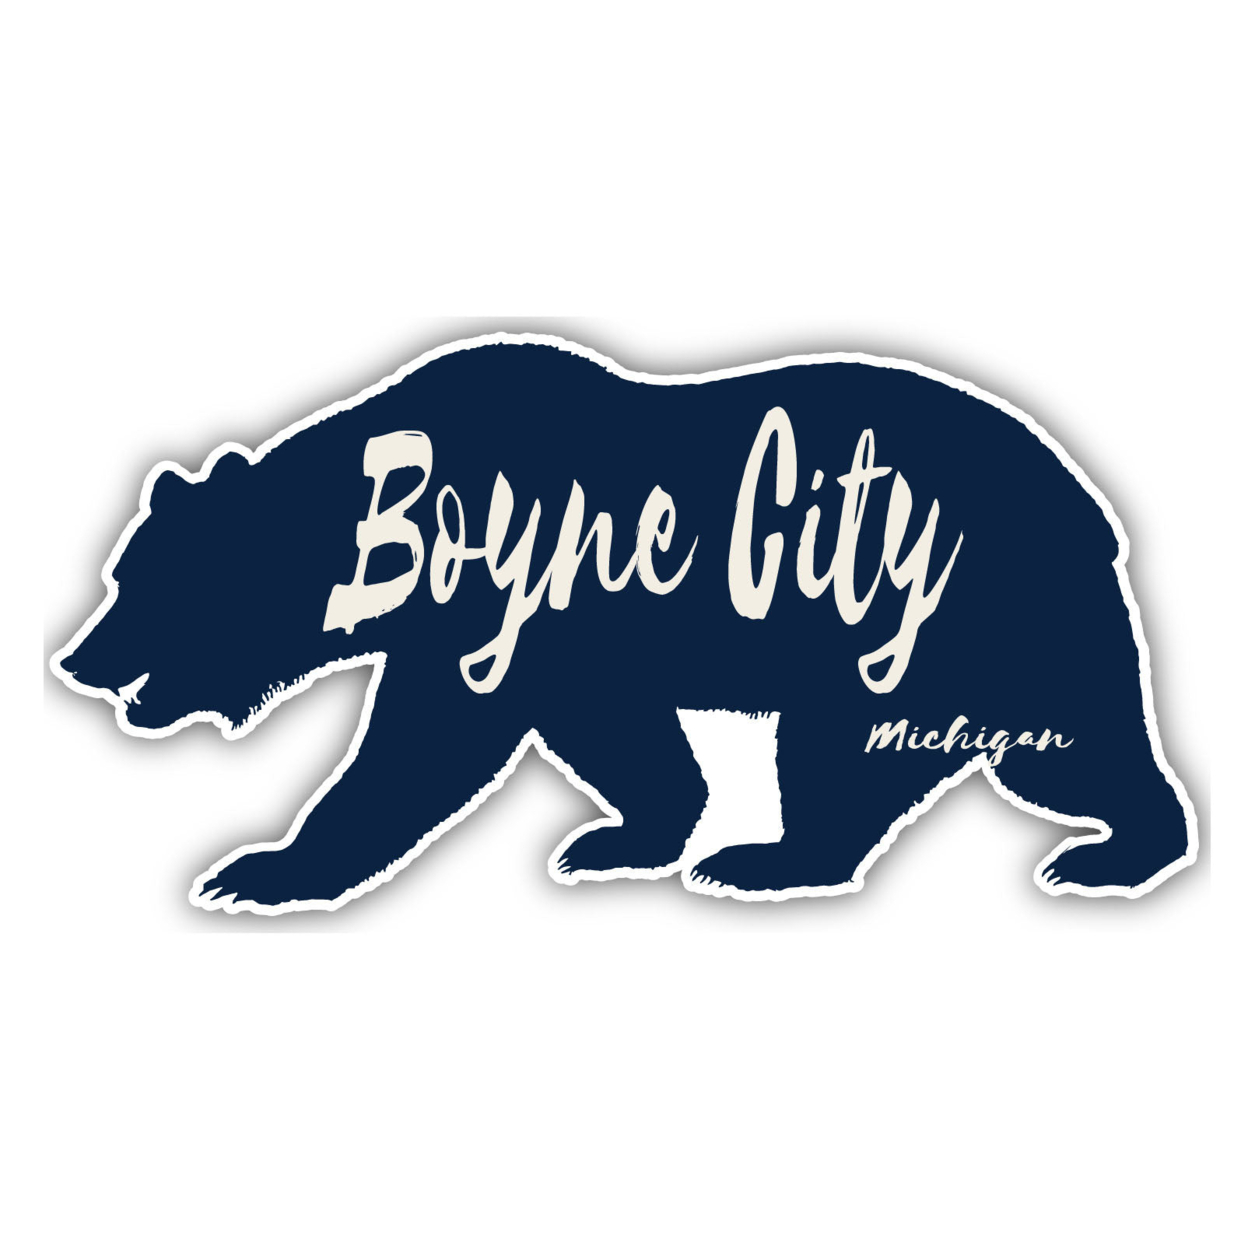 Boyne City Michigan Souvenir Decorative Stickers (Choose Theme And Size) - 4-Pack, 4-Inch, Adventures Awaits